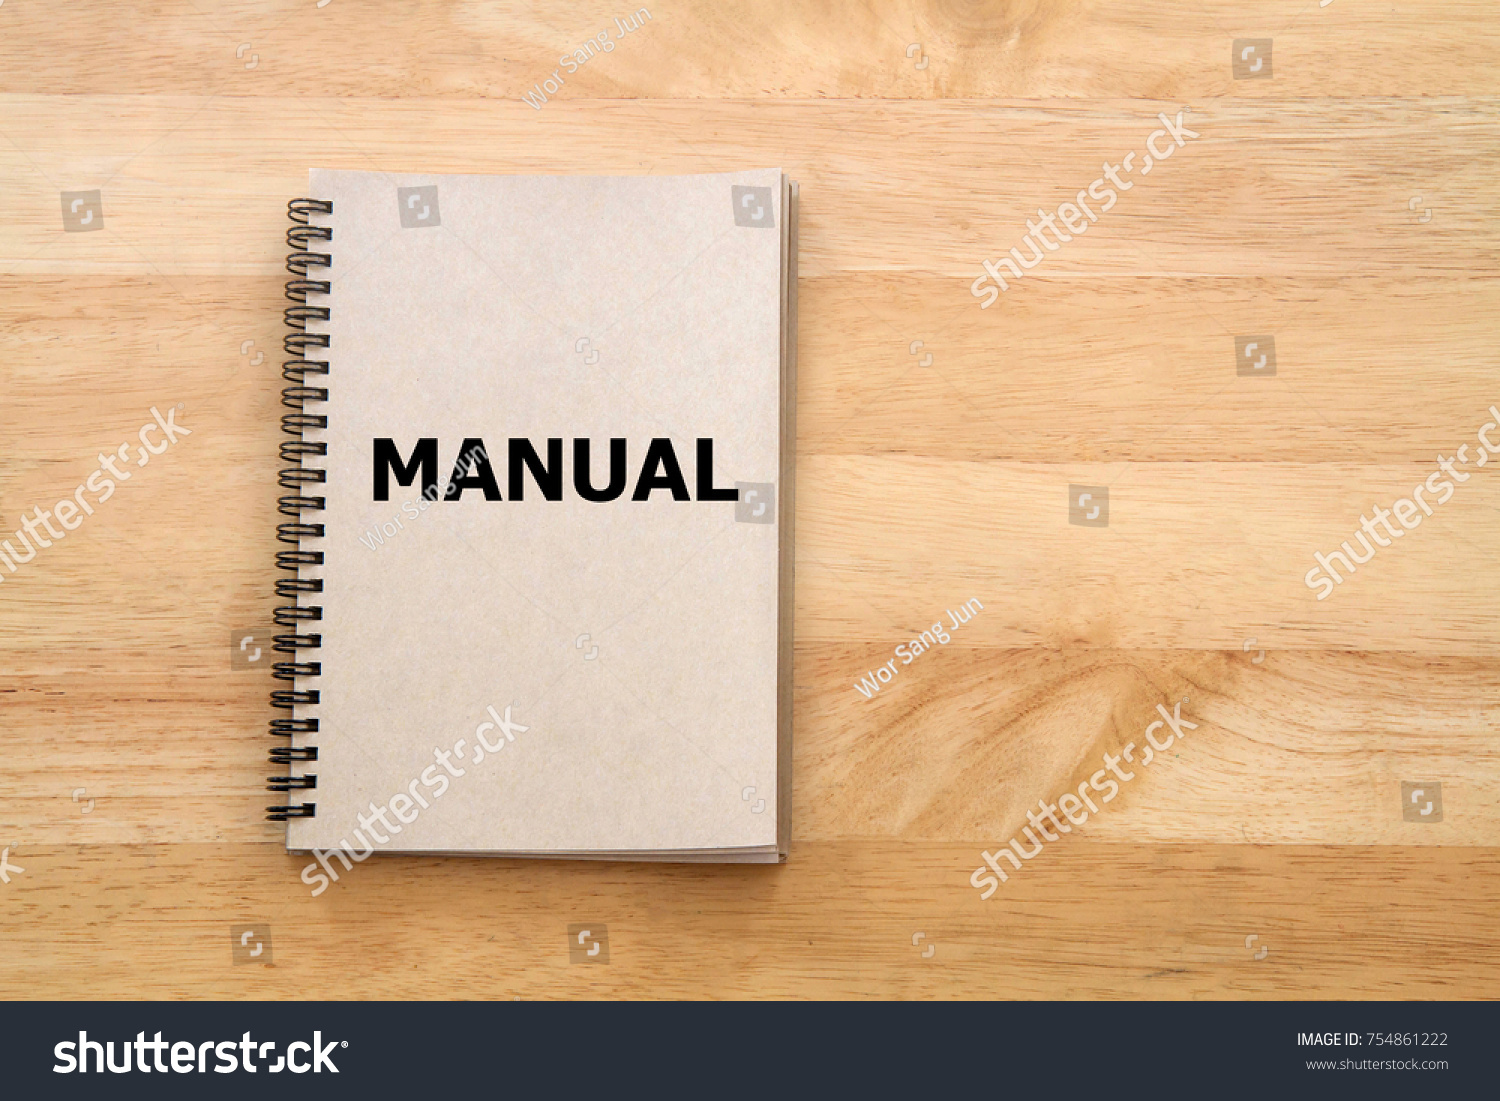 User manual or Instruction manual book on wooden desk #754861222